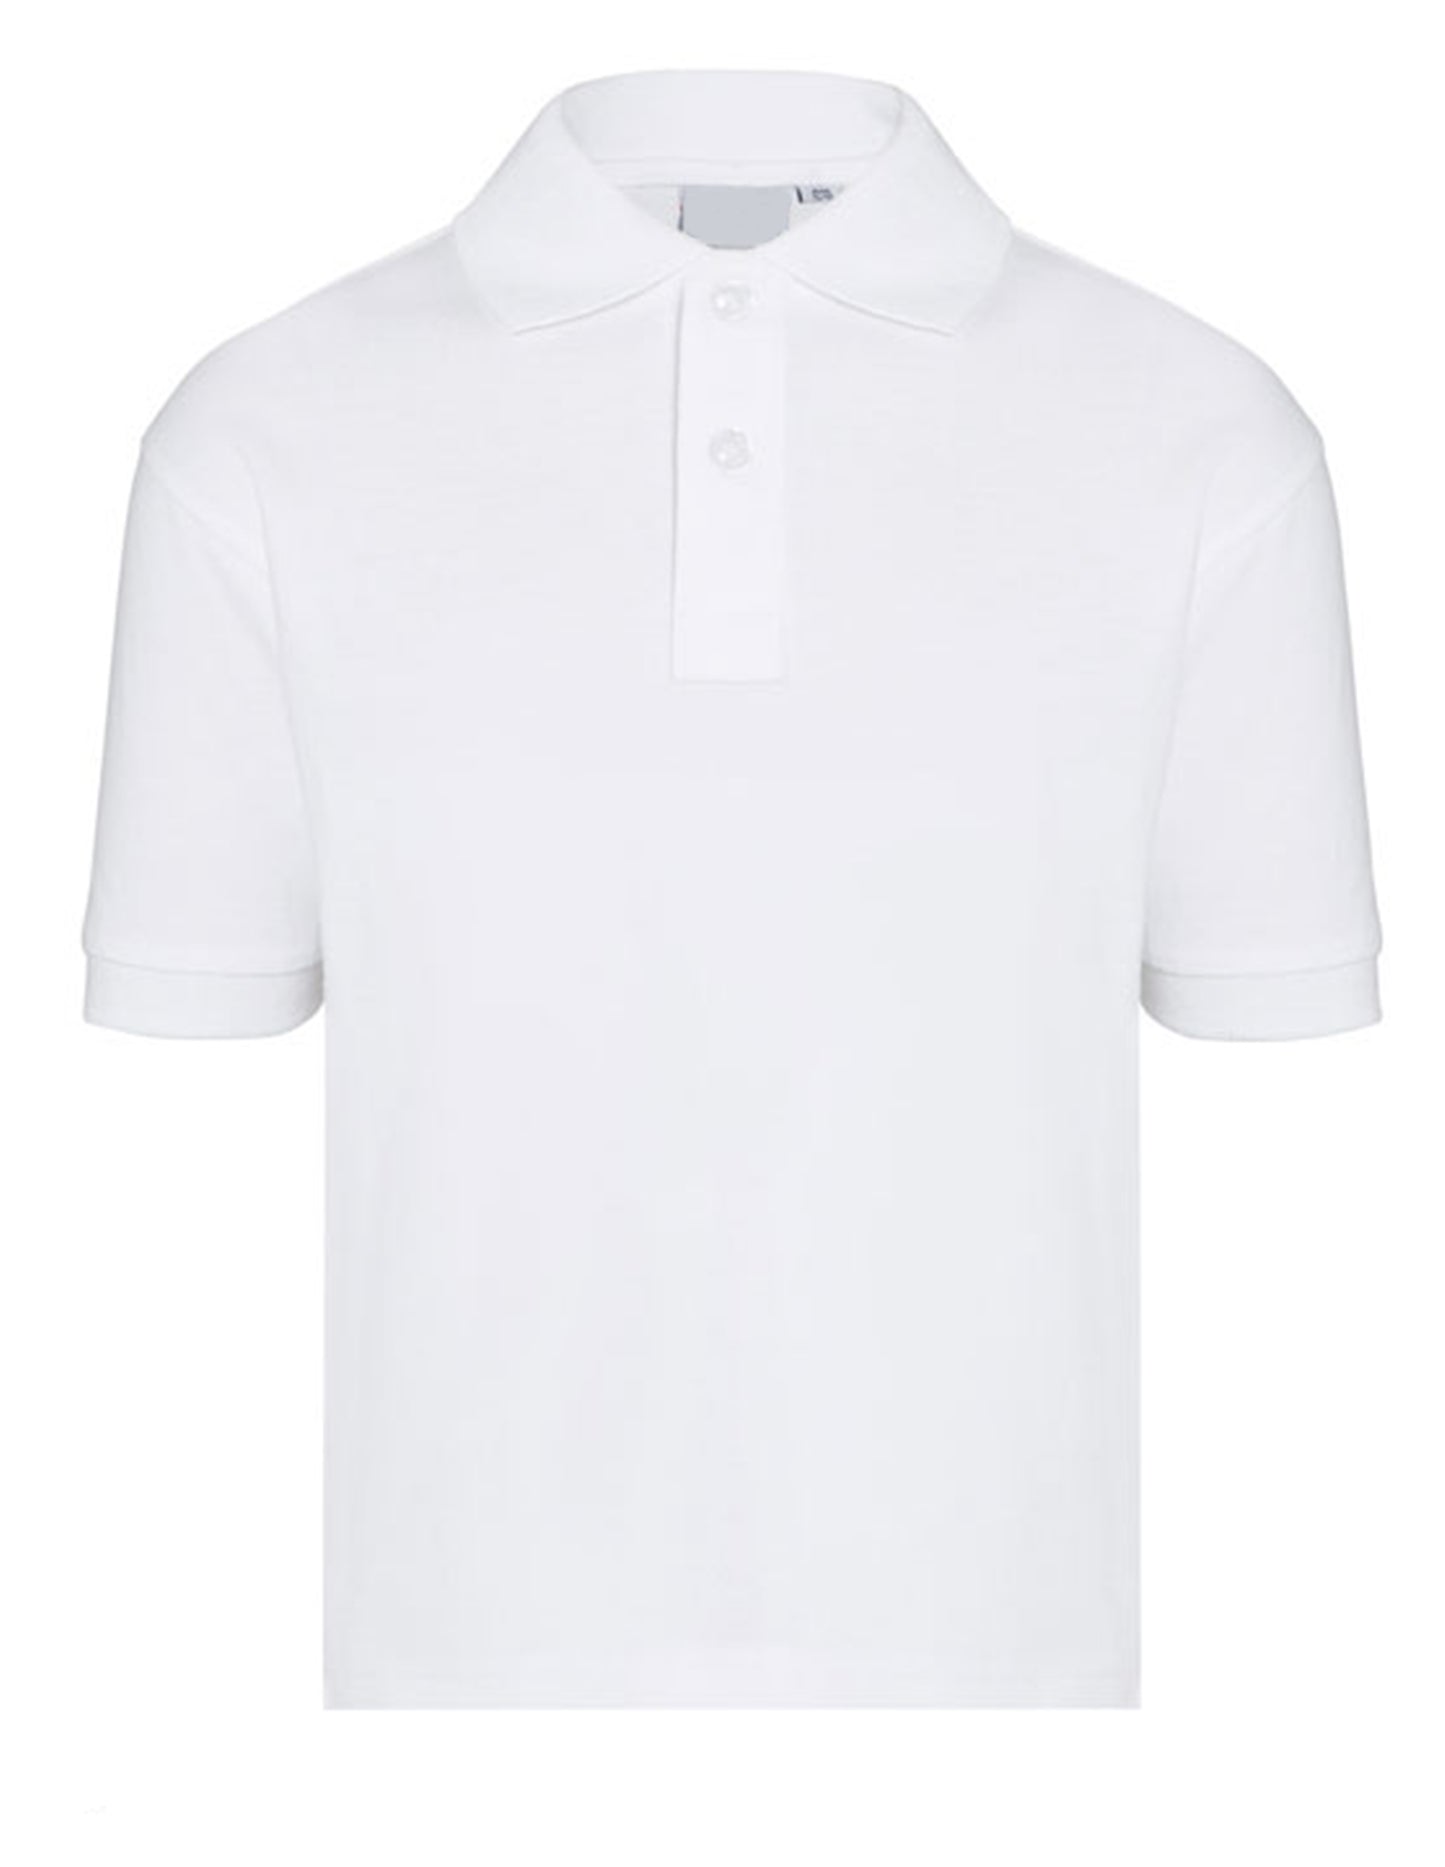 White - Polo Shirt